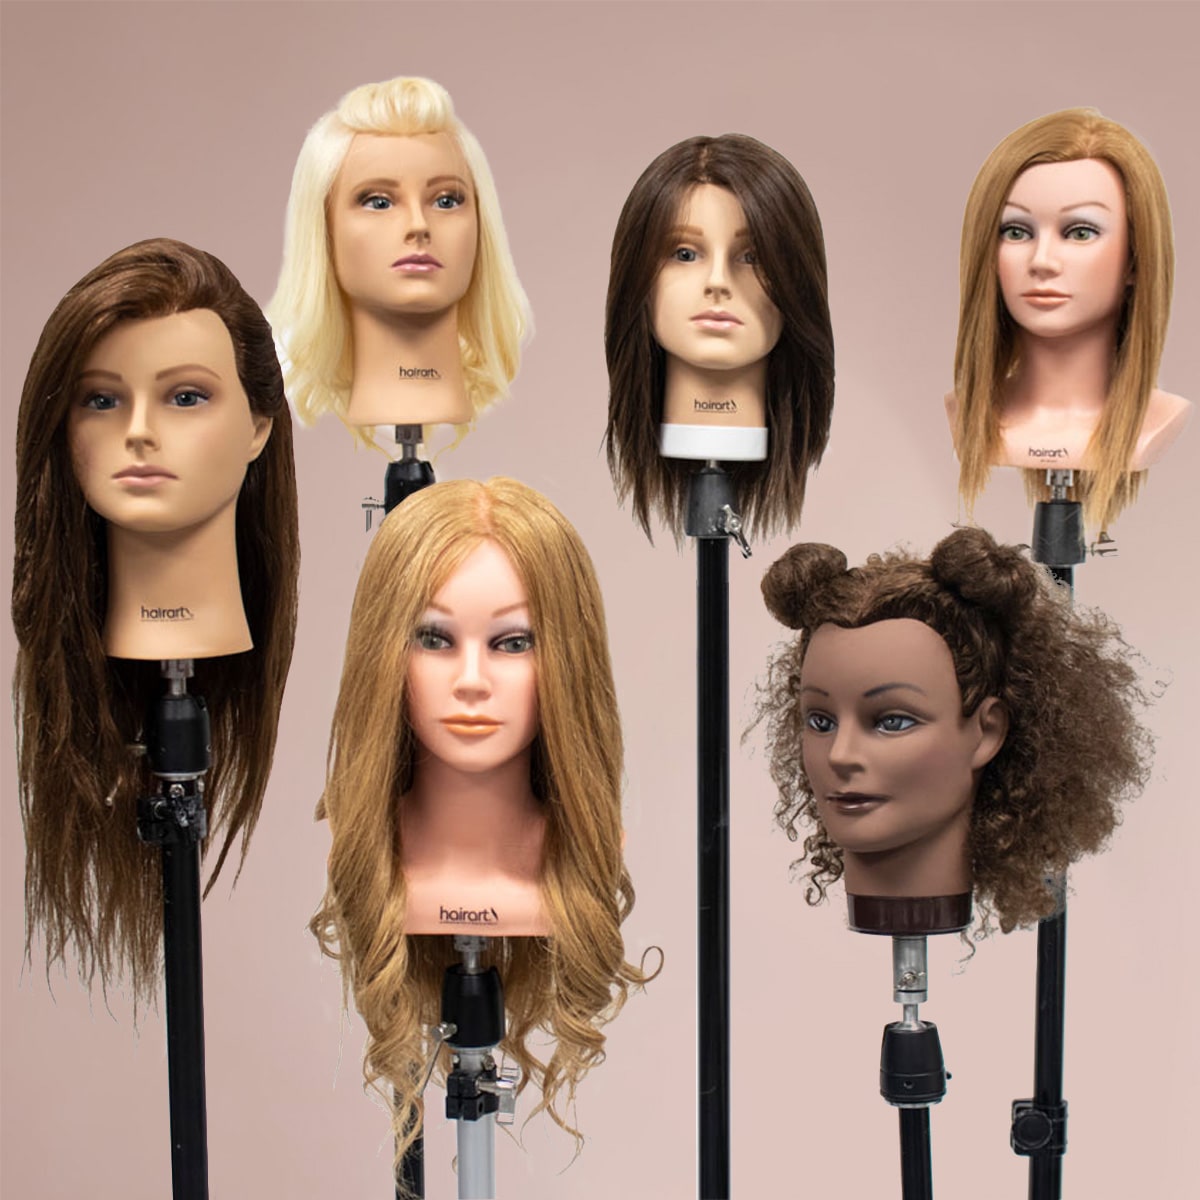 Foam Wig Head Styrofoam Manikin Display Hair Female Display Women's Wigs  Display Stand Foam Mannequin for Salon Barber Shop Home